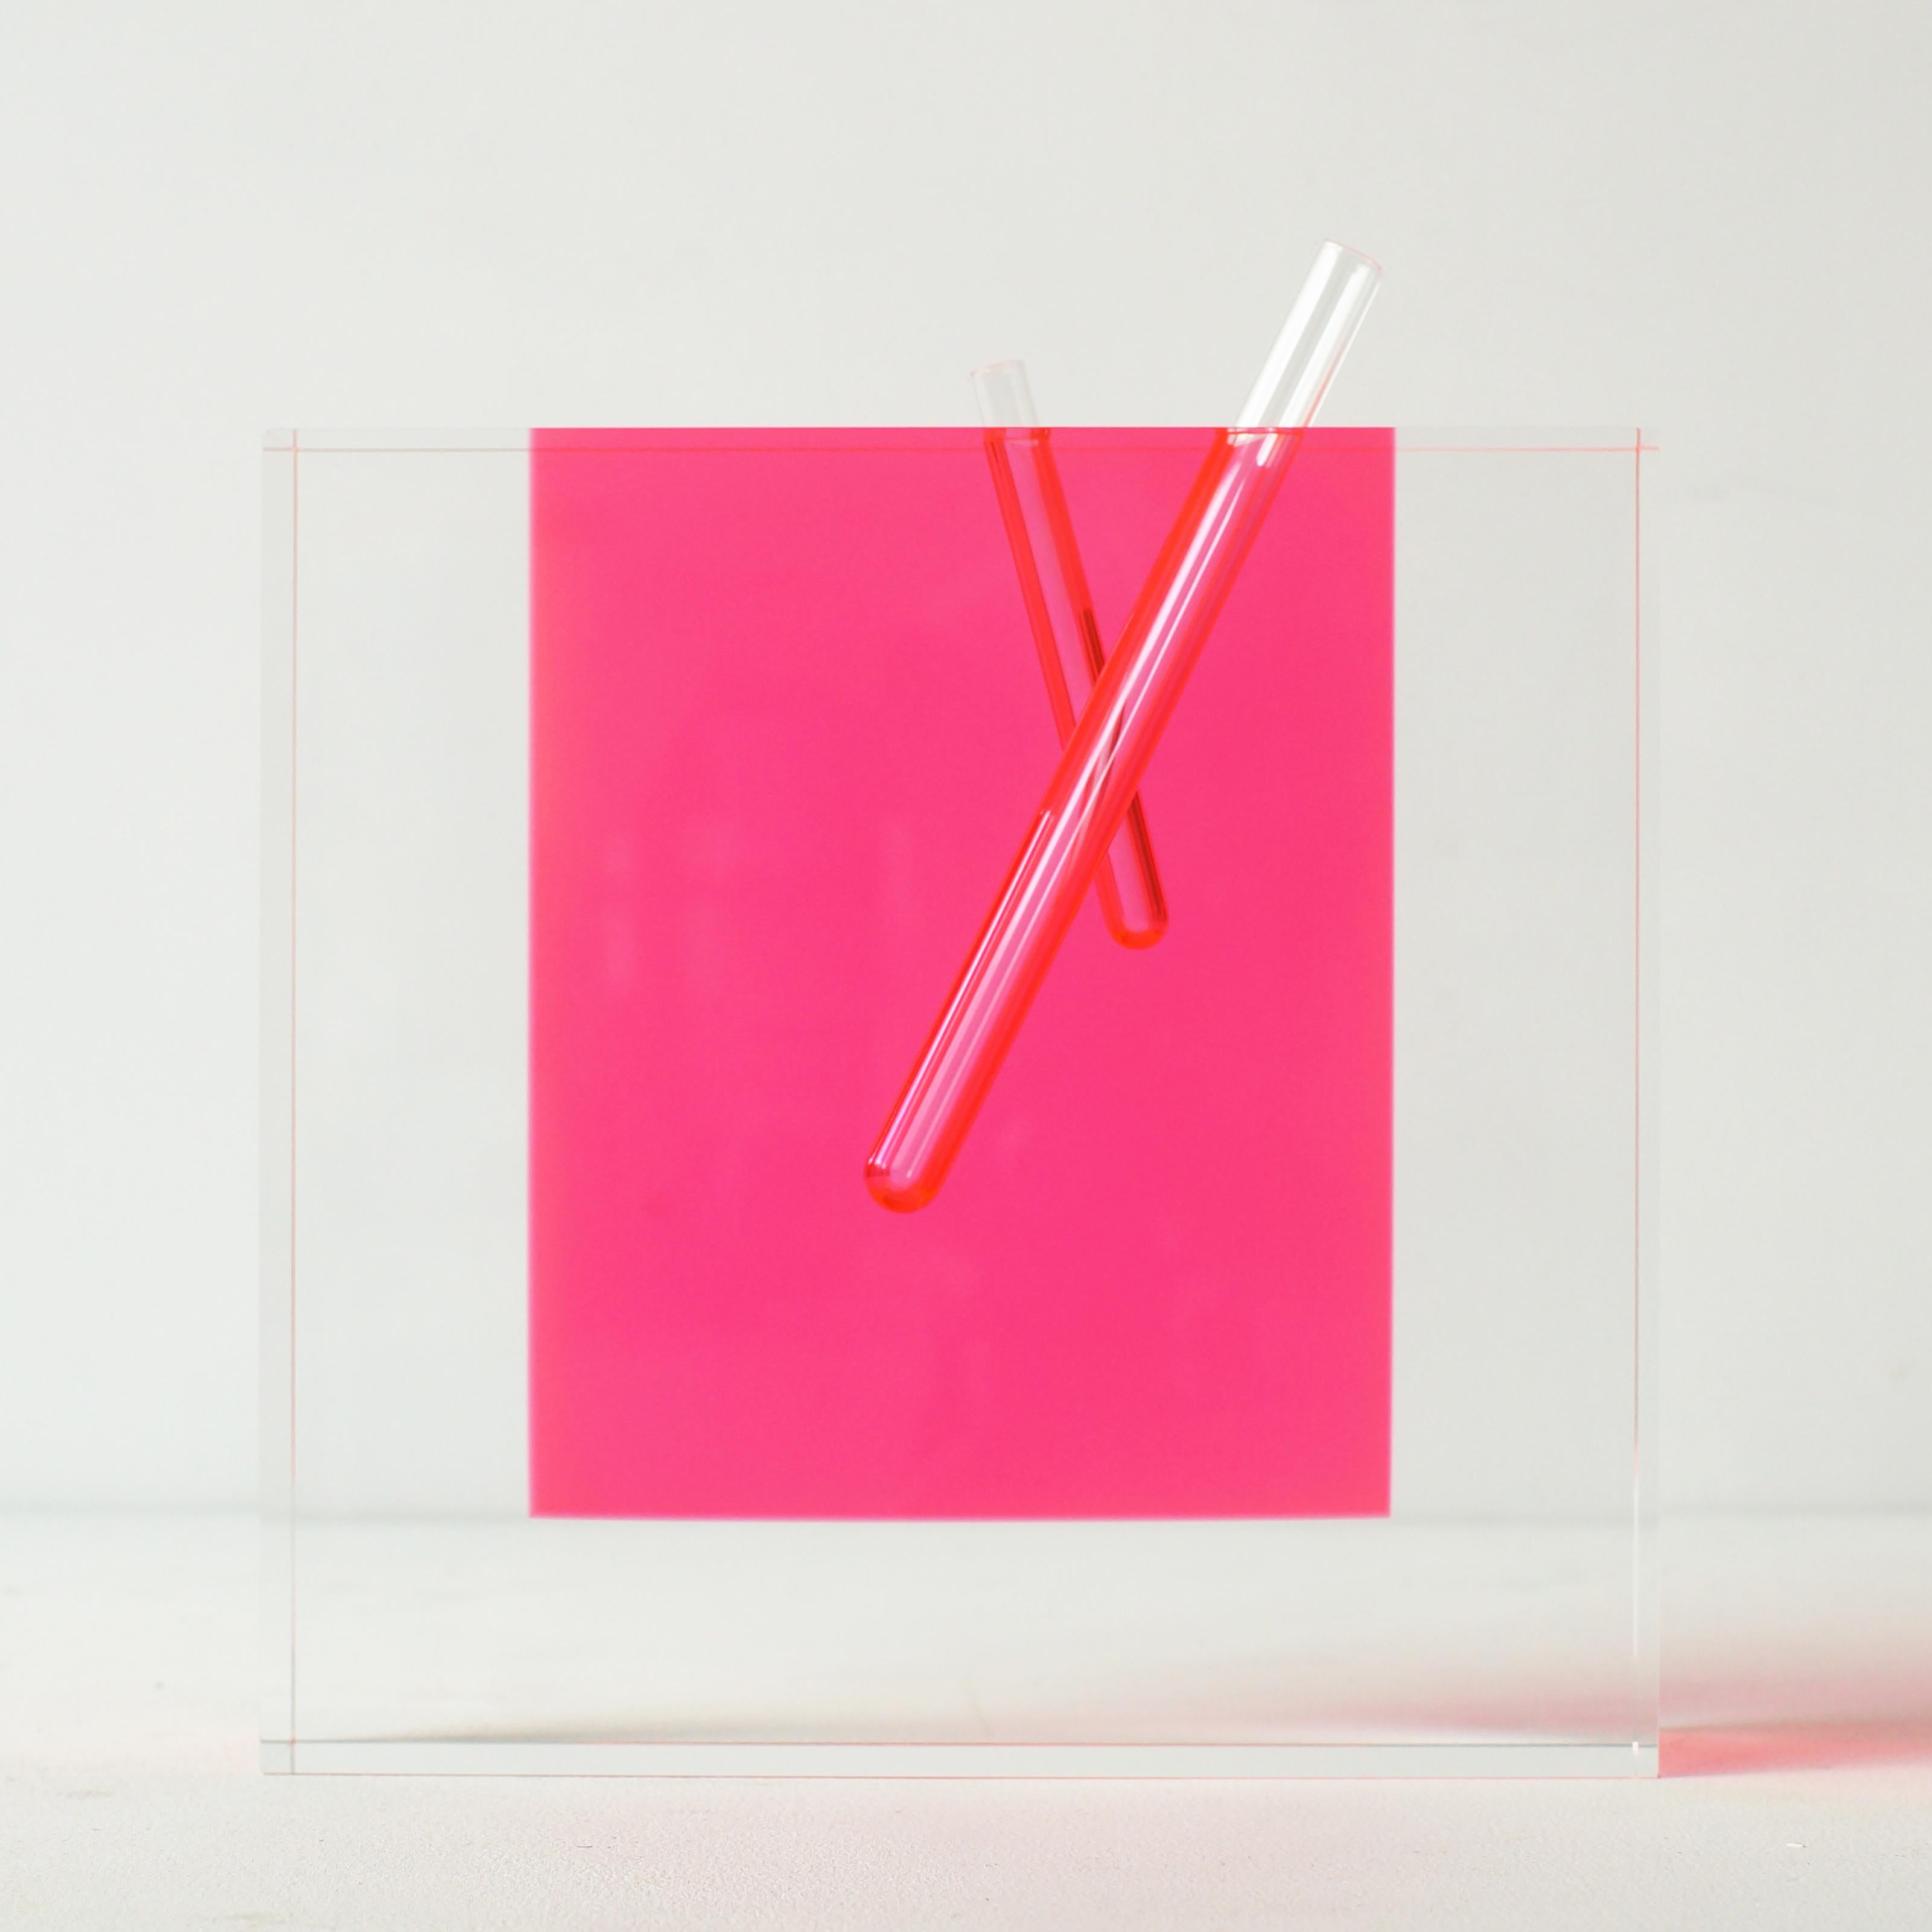 Shiro Kuramata acrylic pink vase large model. Mint condition. Pink and clear acrylic bock with glass tube.